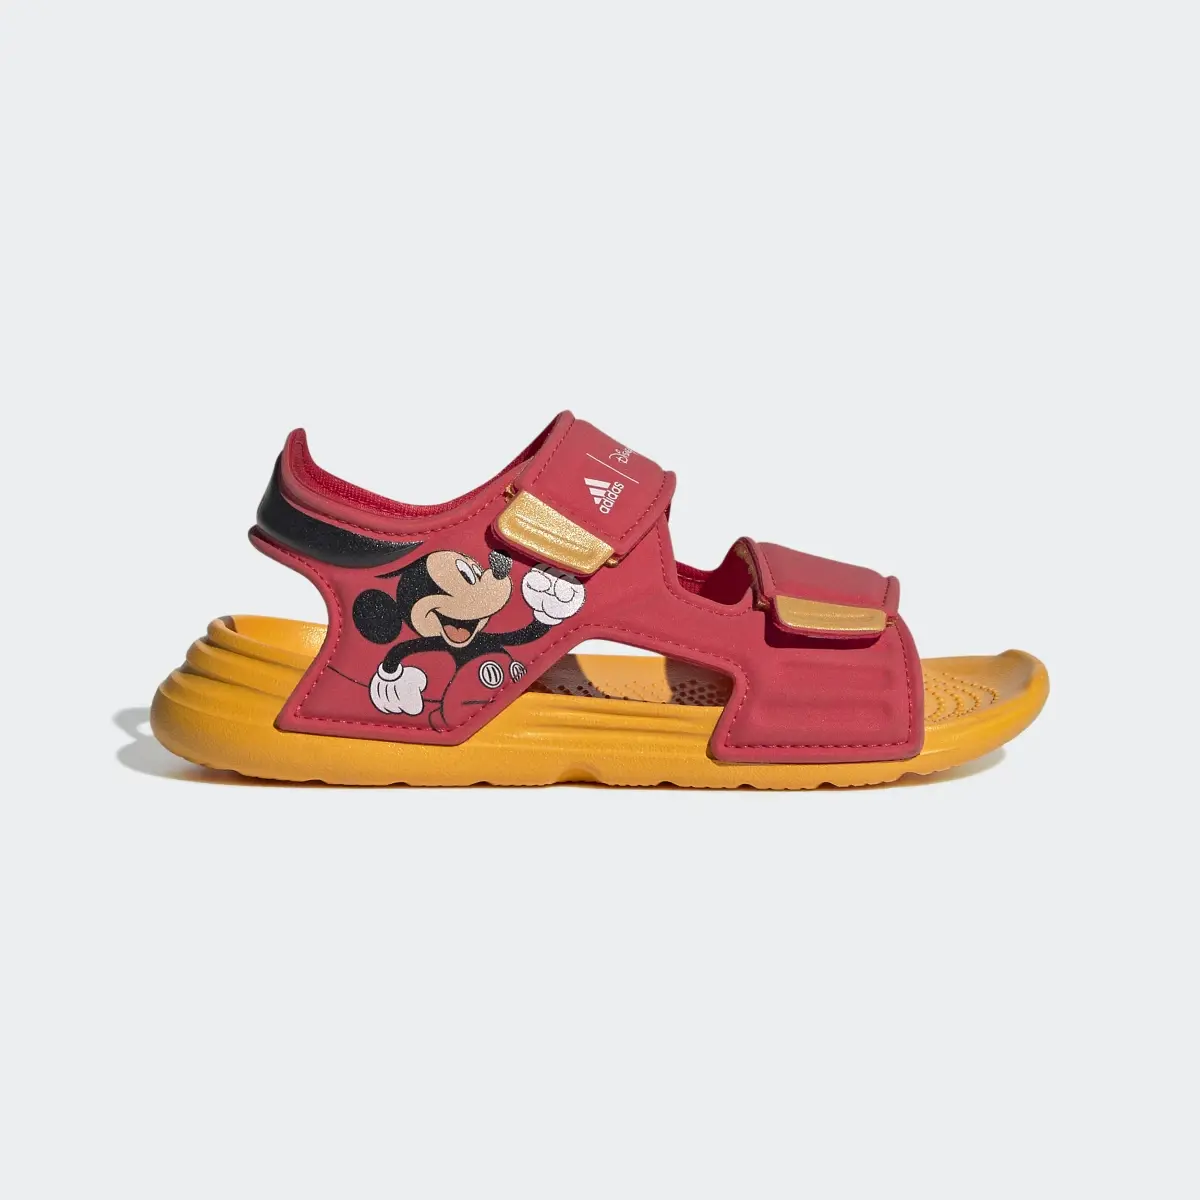 Adidas x Disney Mickey Maus AltaSwim Sandale. 2